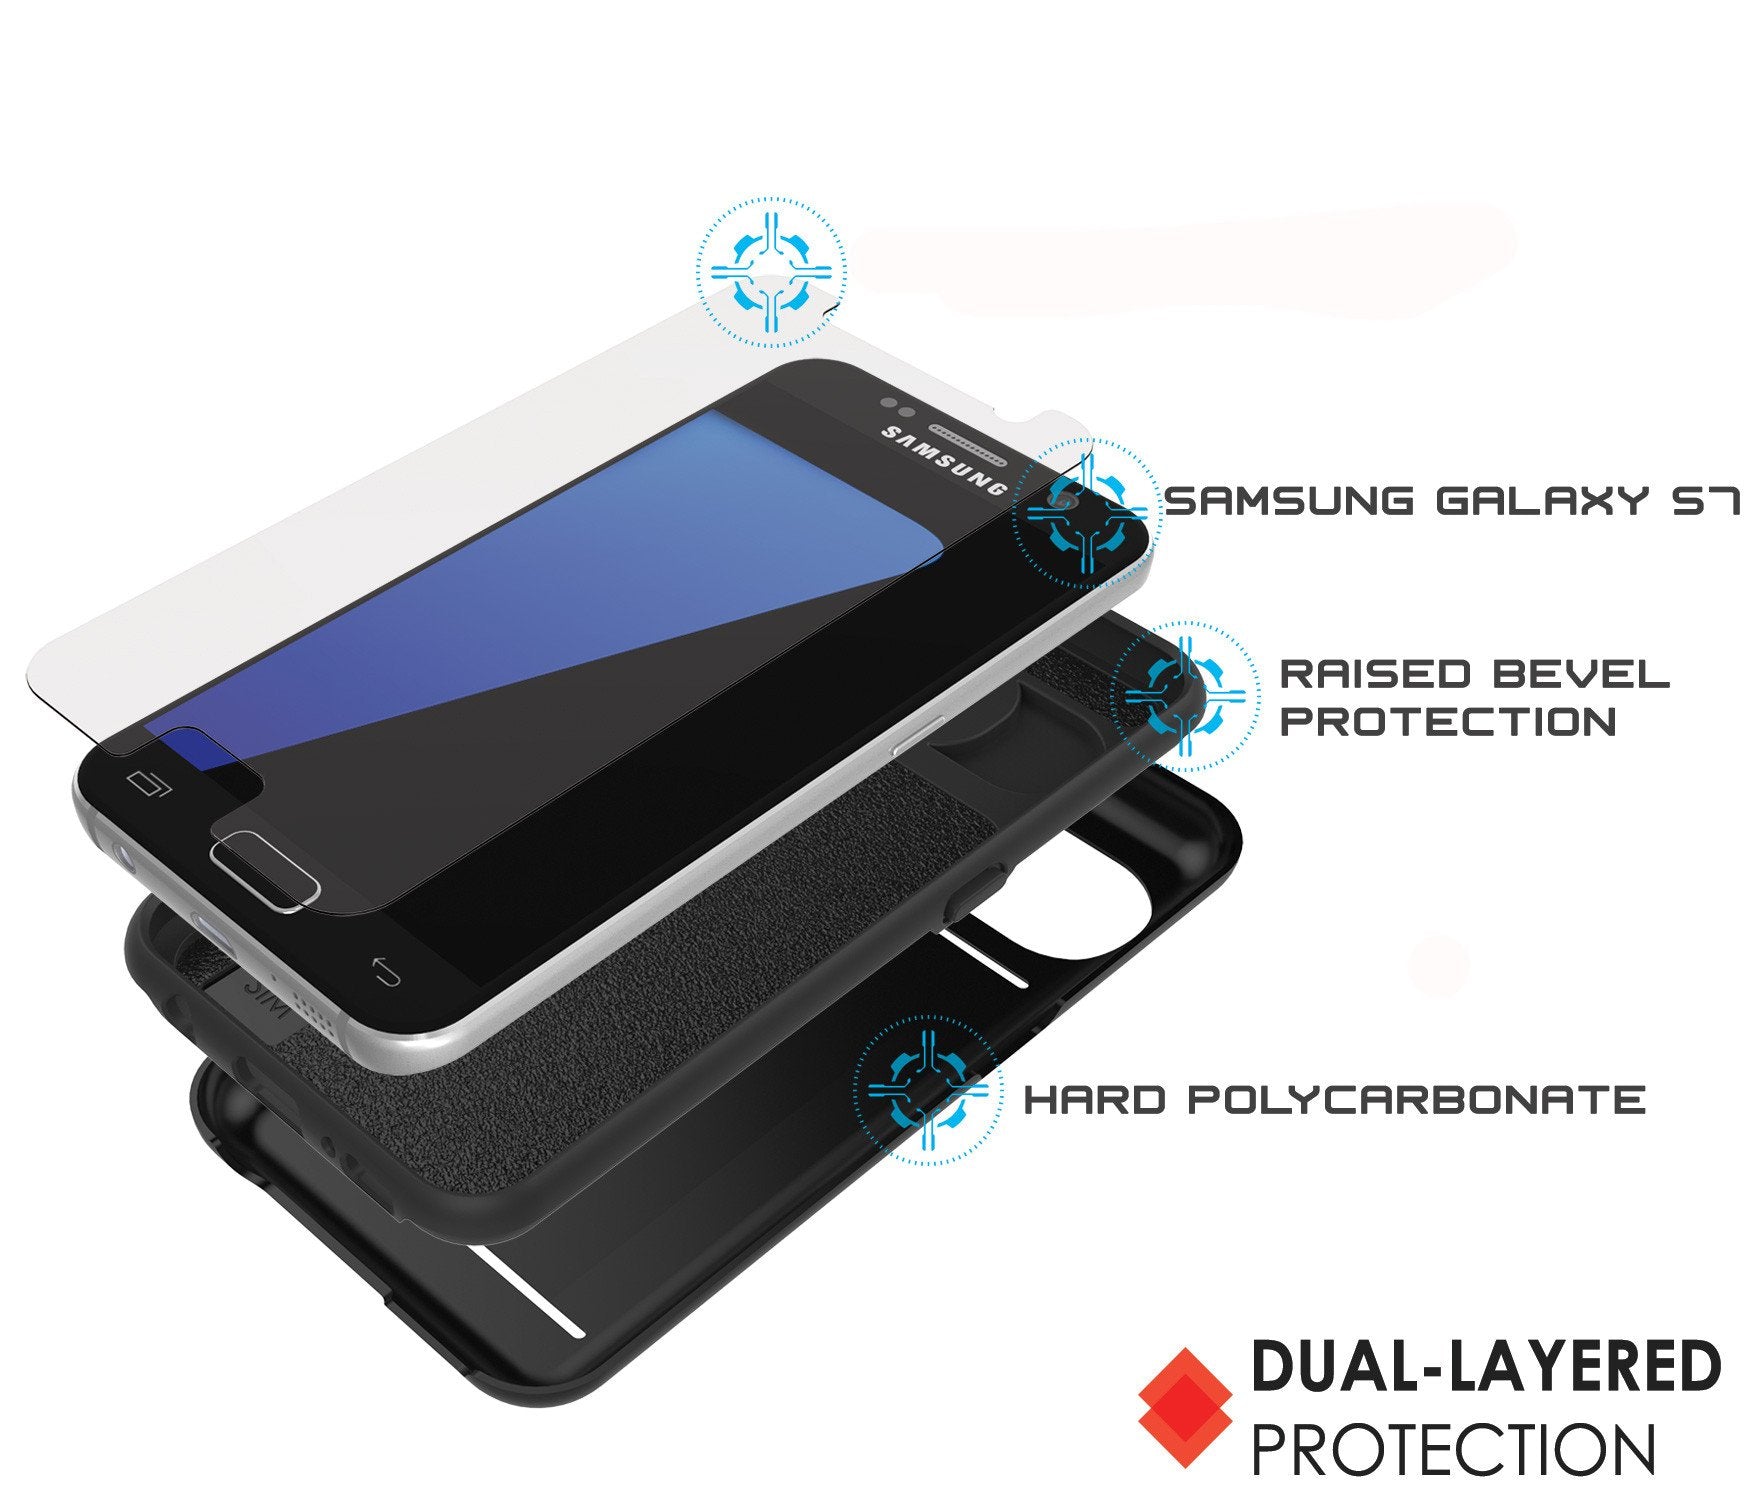 Galaxy S7 EDGE Case PunkCase CLUTCH Black Series Slim Armor Soft Cover Case w/ Screen Protector - PunkCase NZ